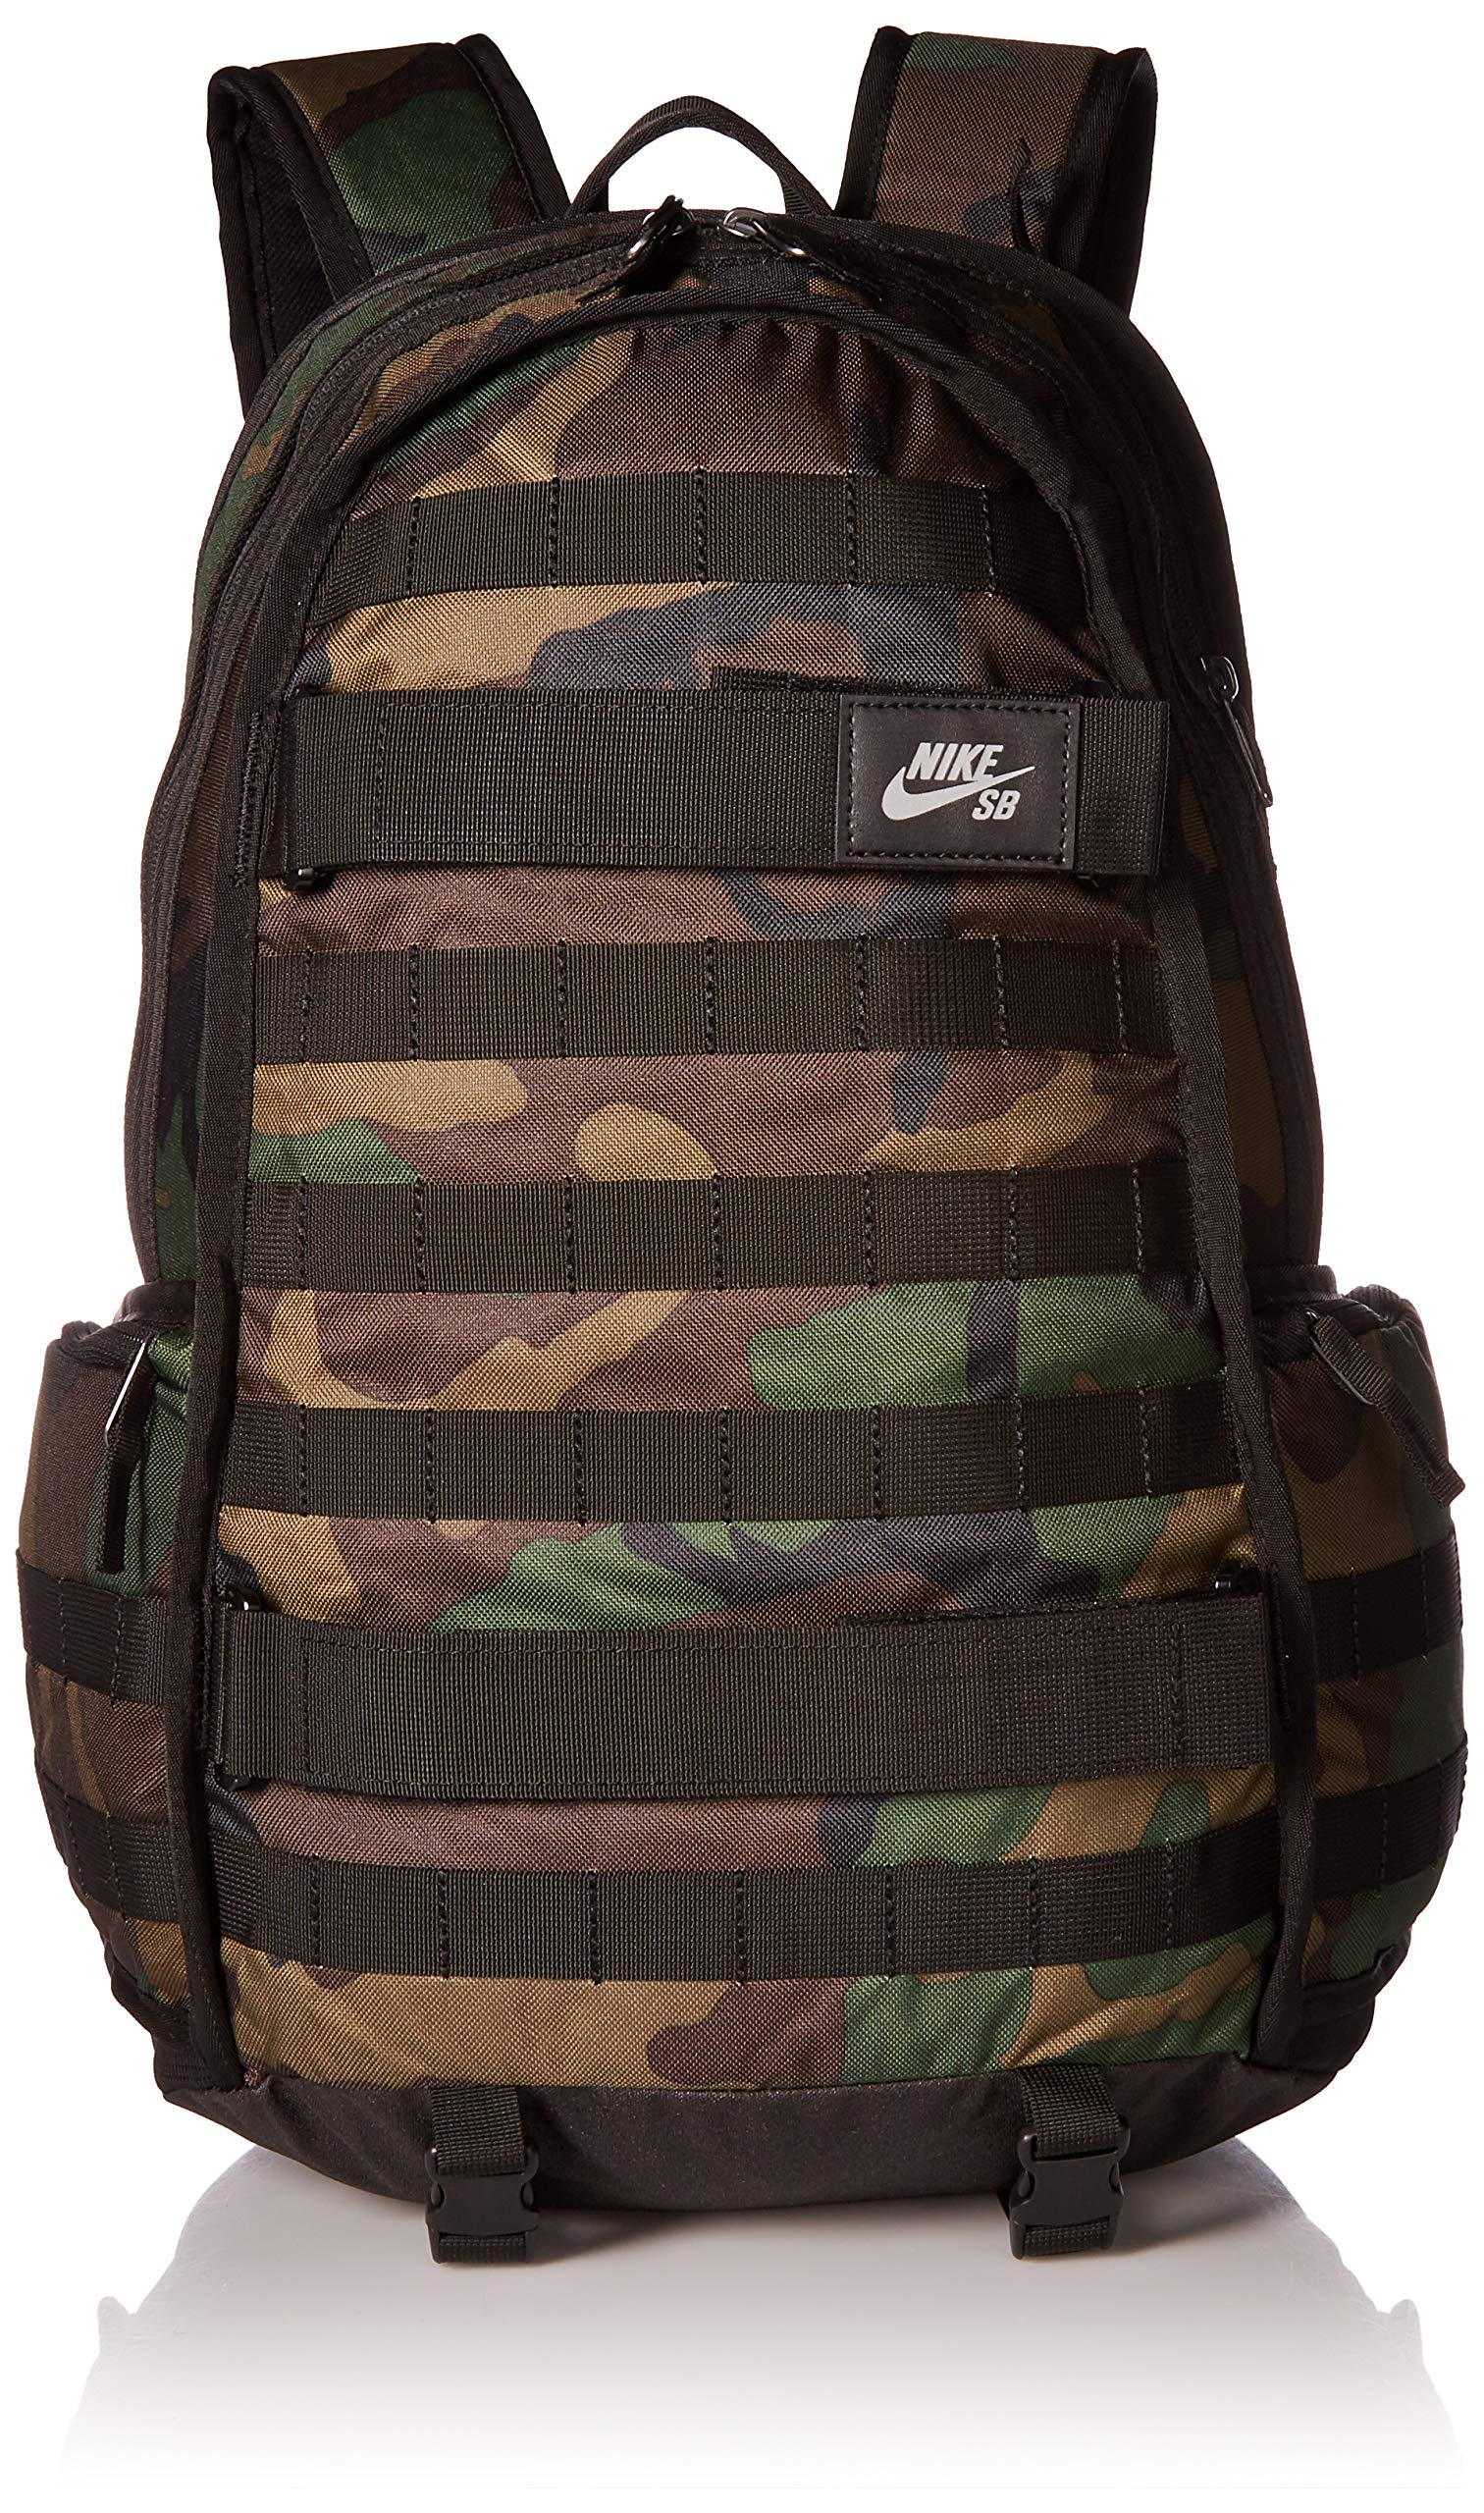 NWT|Nike SB RPM Skate Backpack | Backpack outfit, Skate backpack, Nike sb  backpack